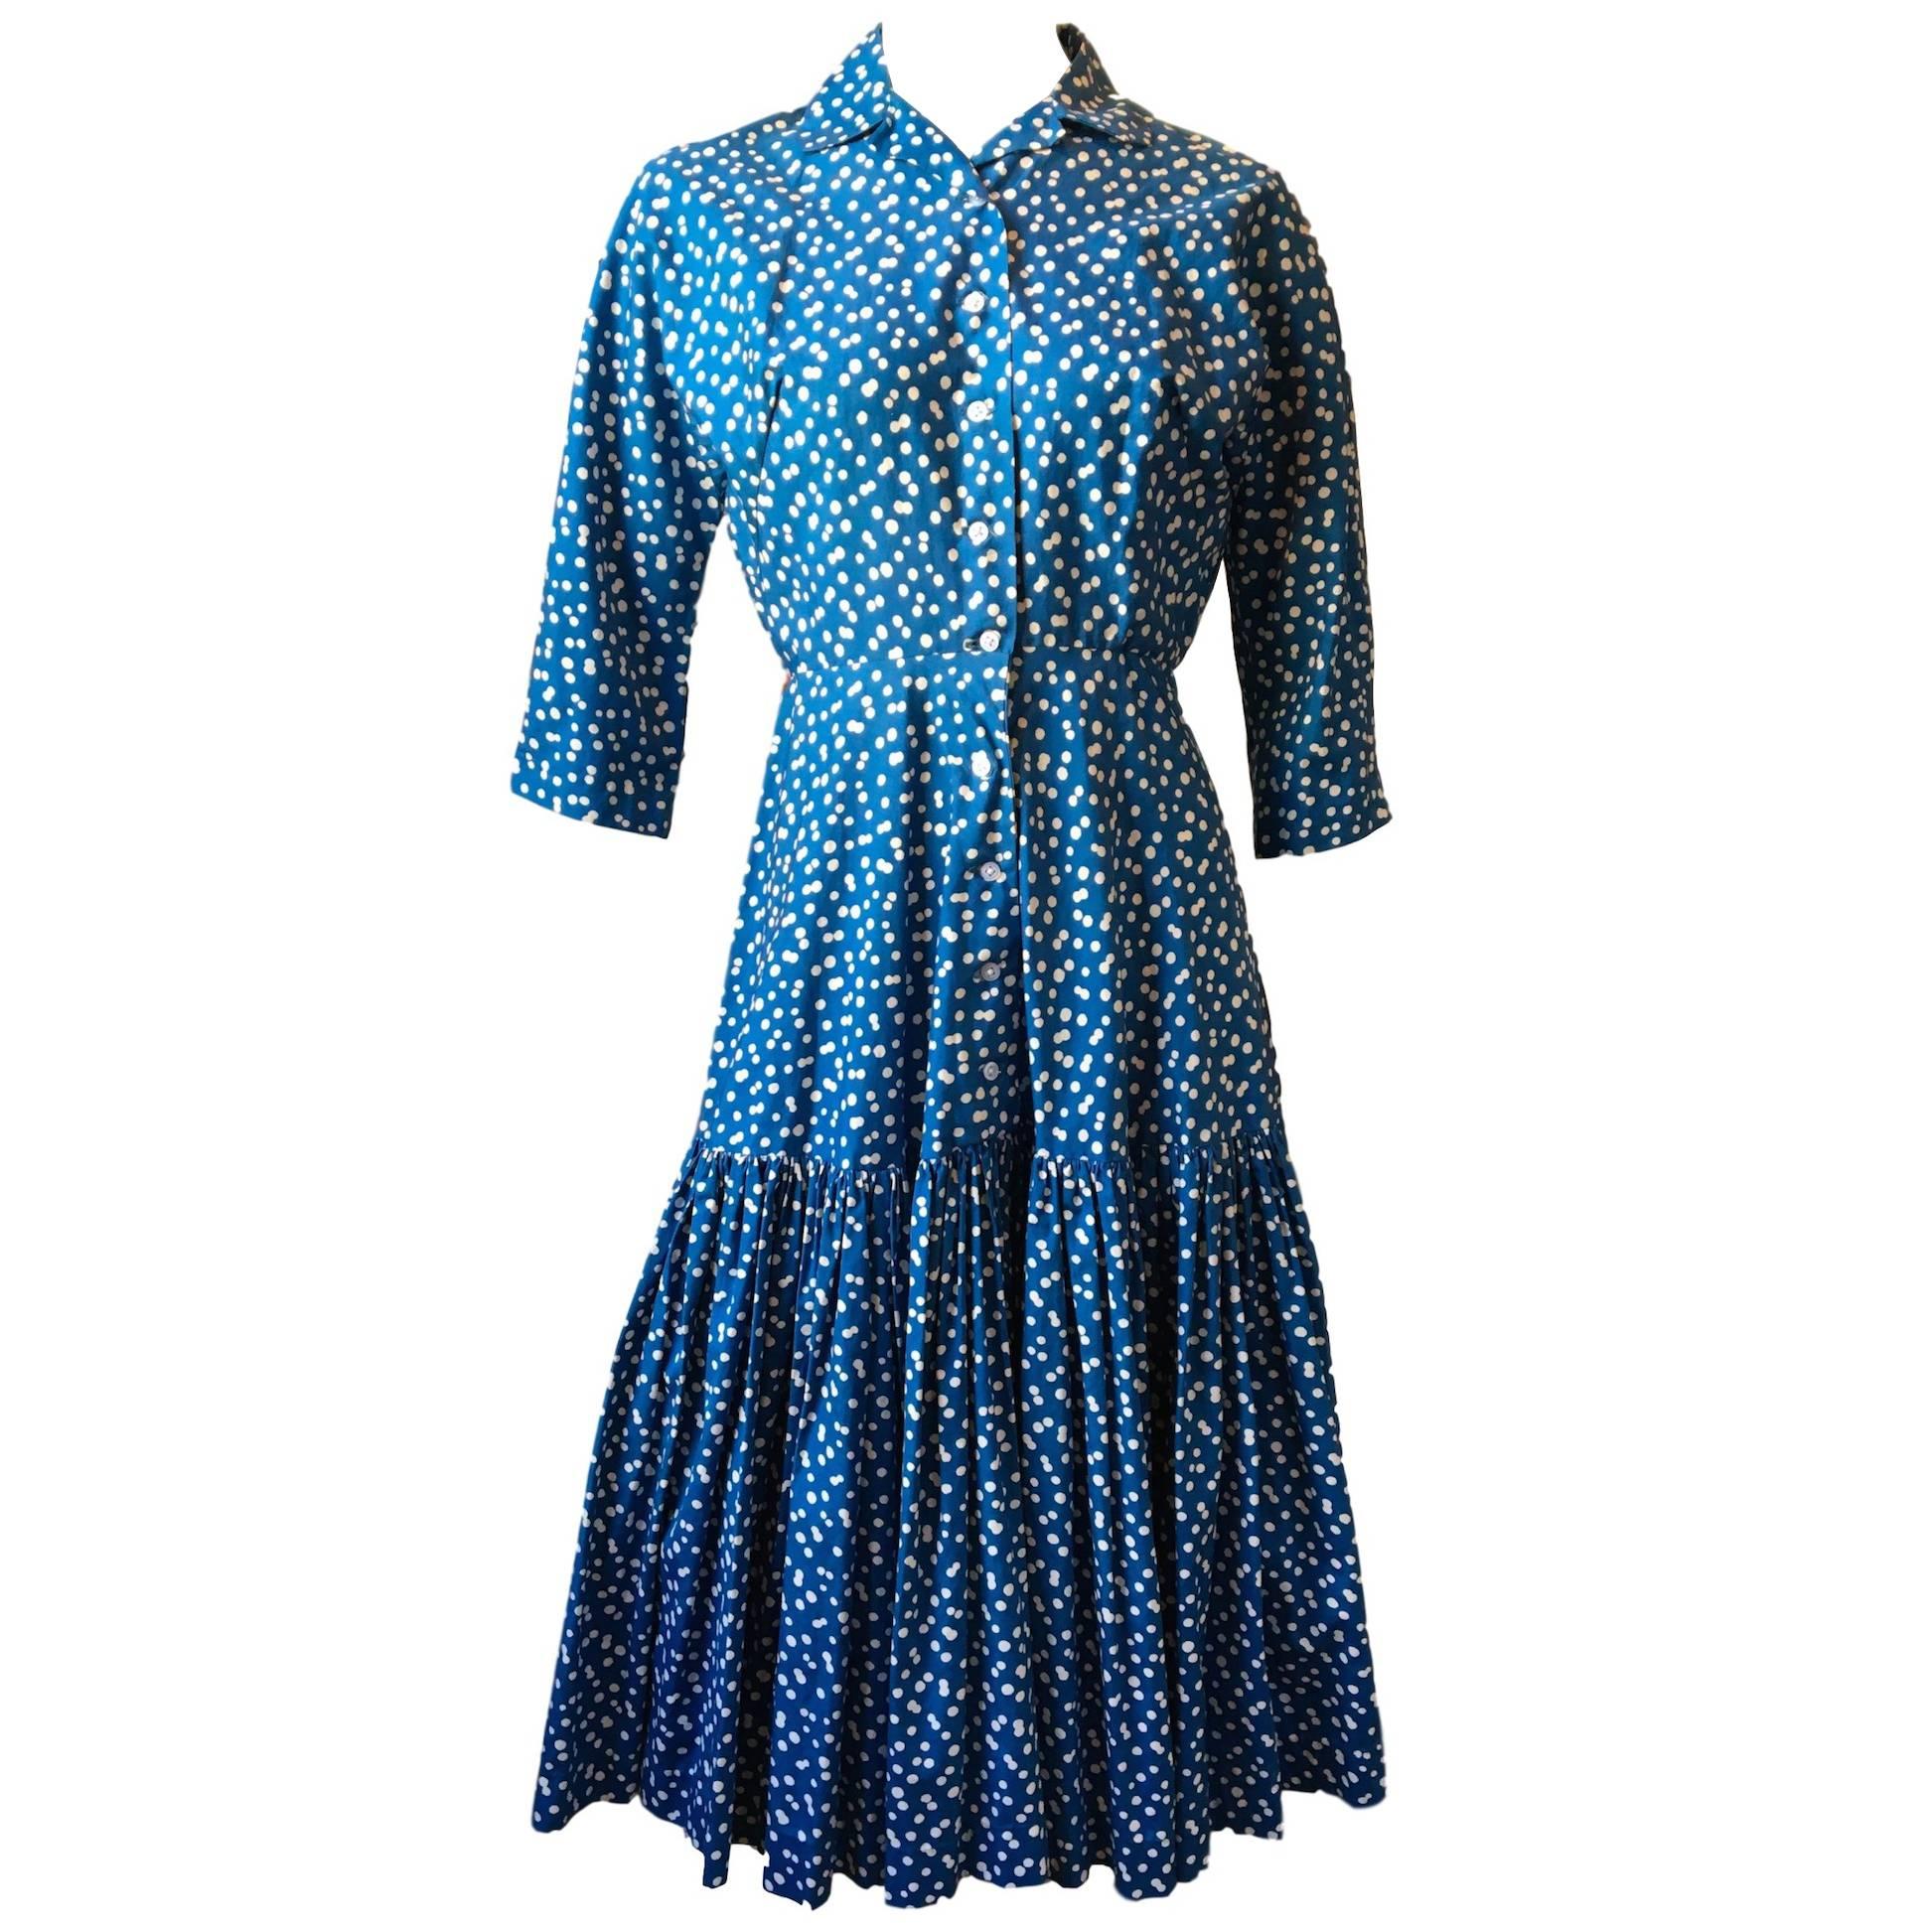 Horrockses Blue white Polka Dot Cotton 1950s Dropped Waist Dress 